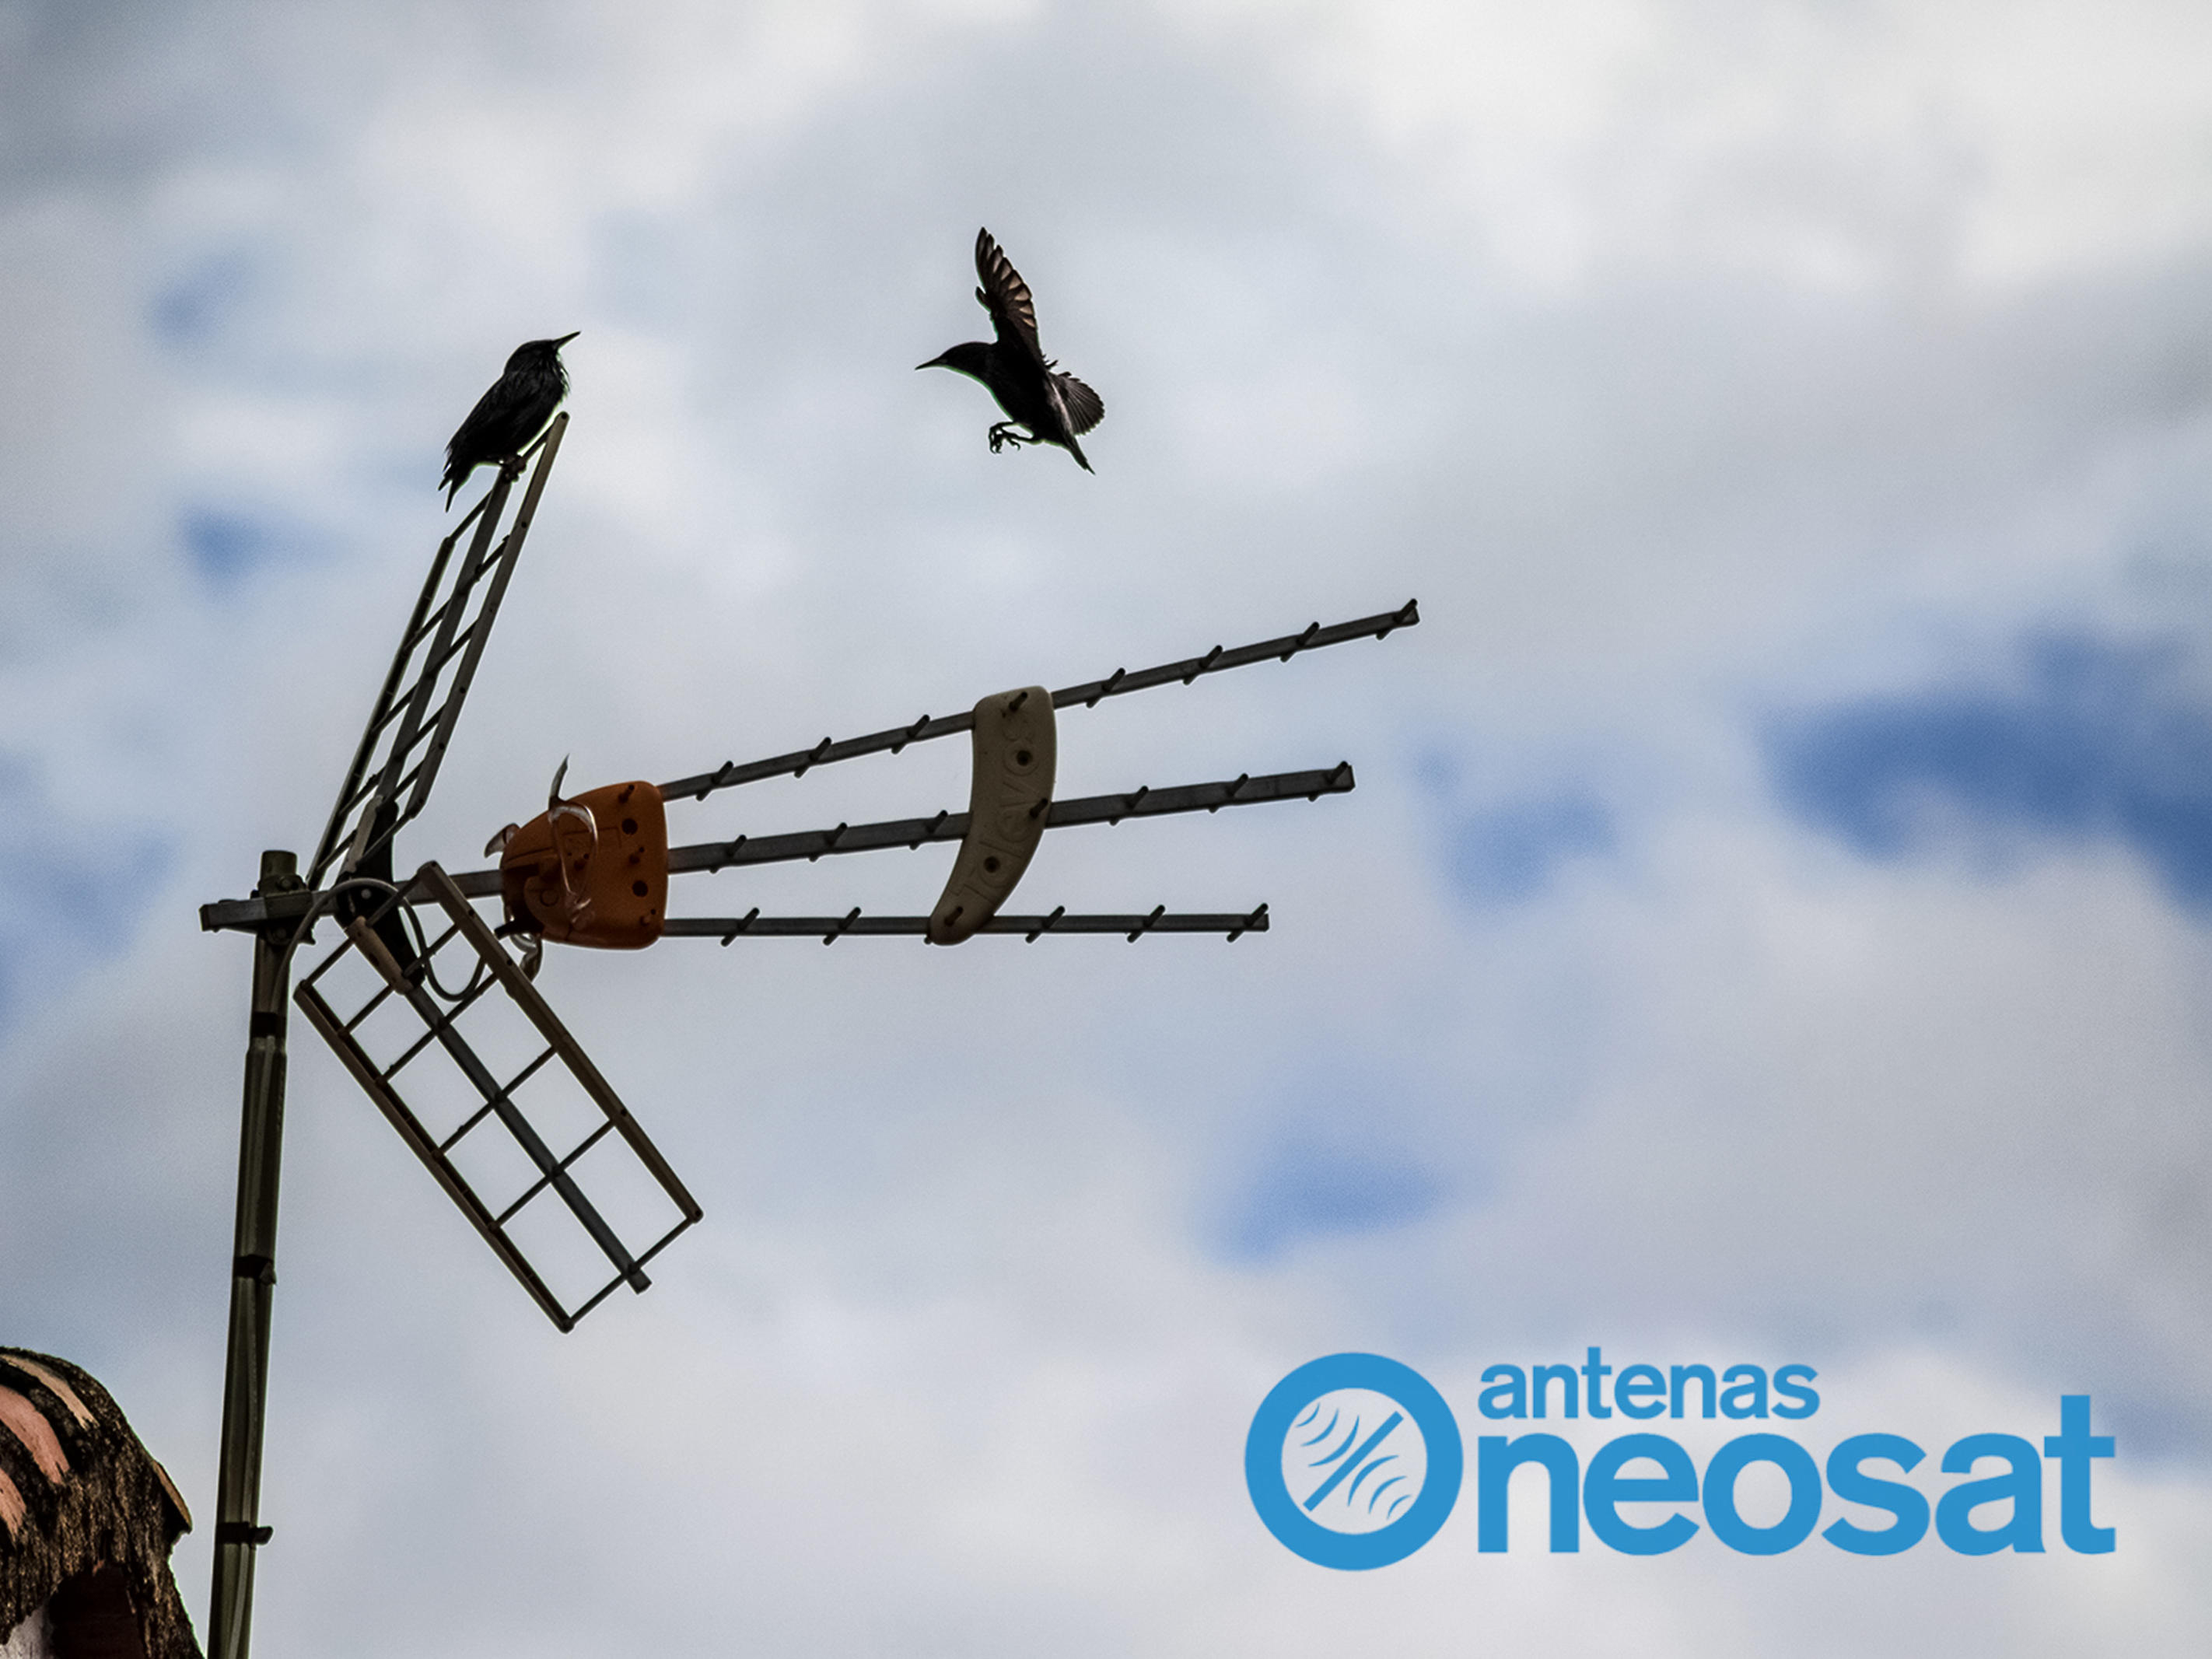 Images Antenas Neosat